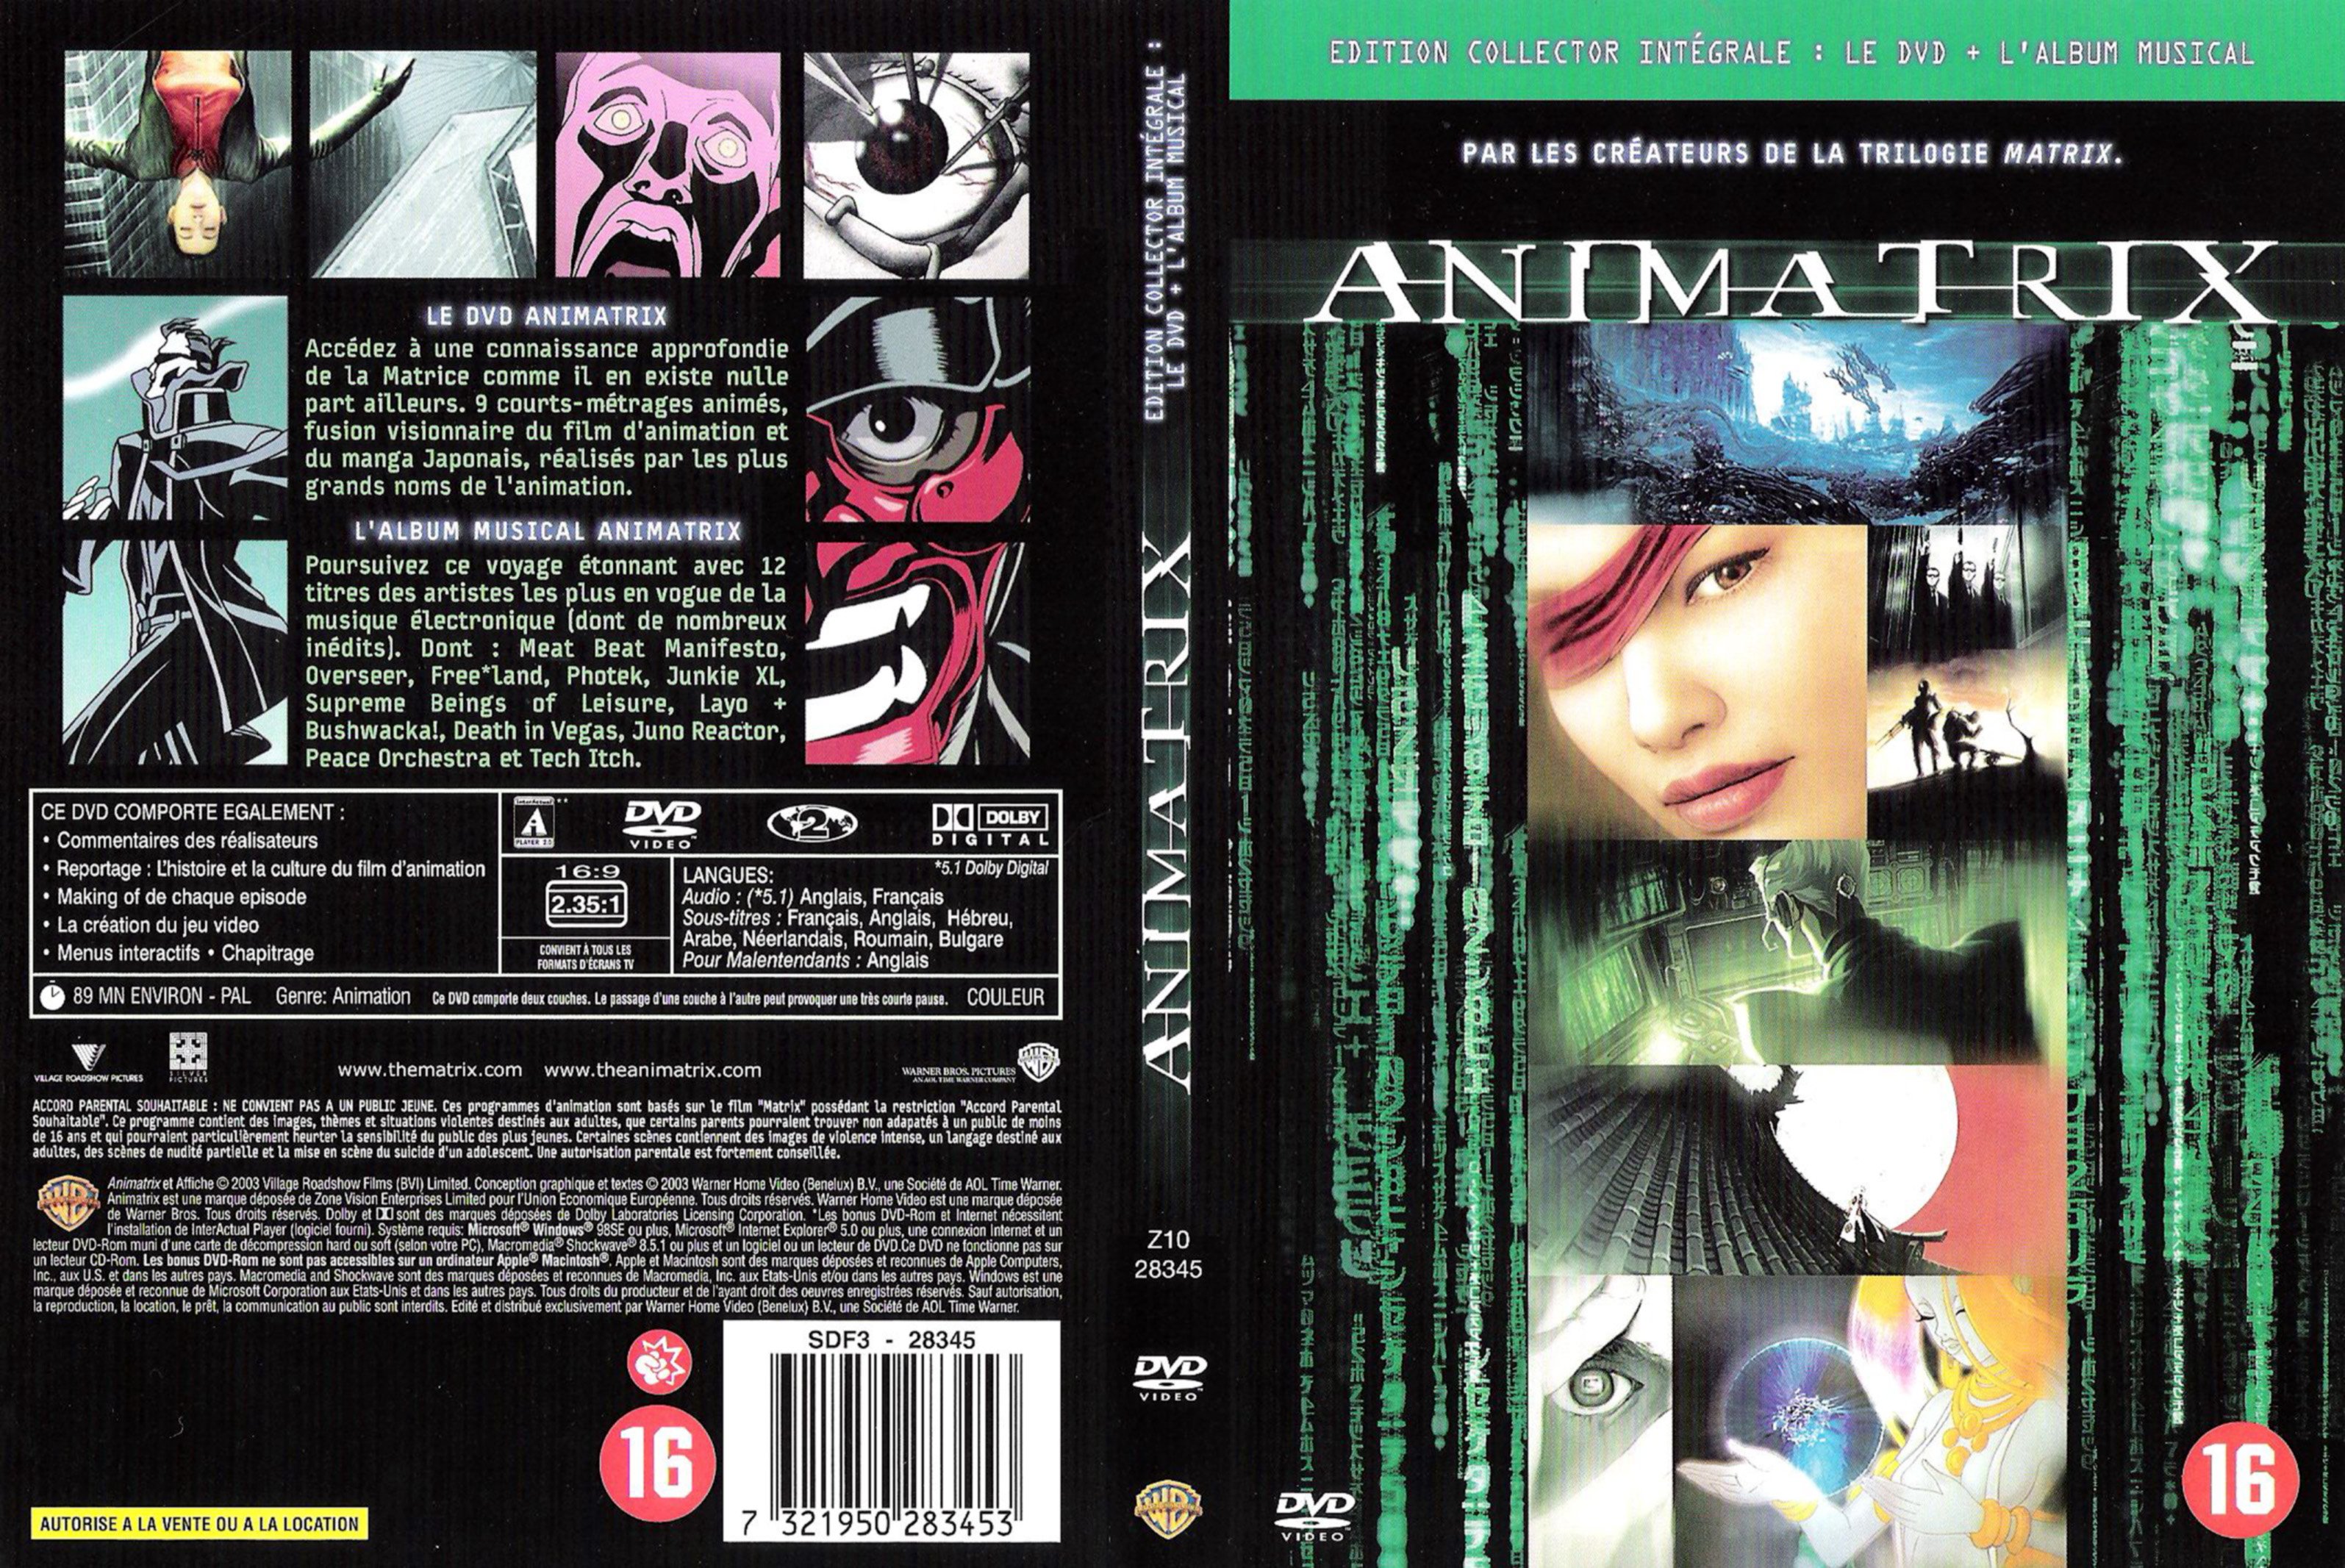 Jaquette DVD Animatrix v2